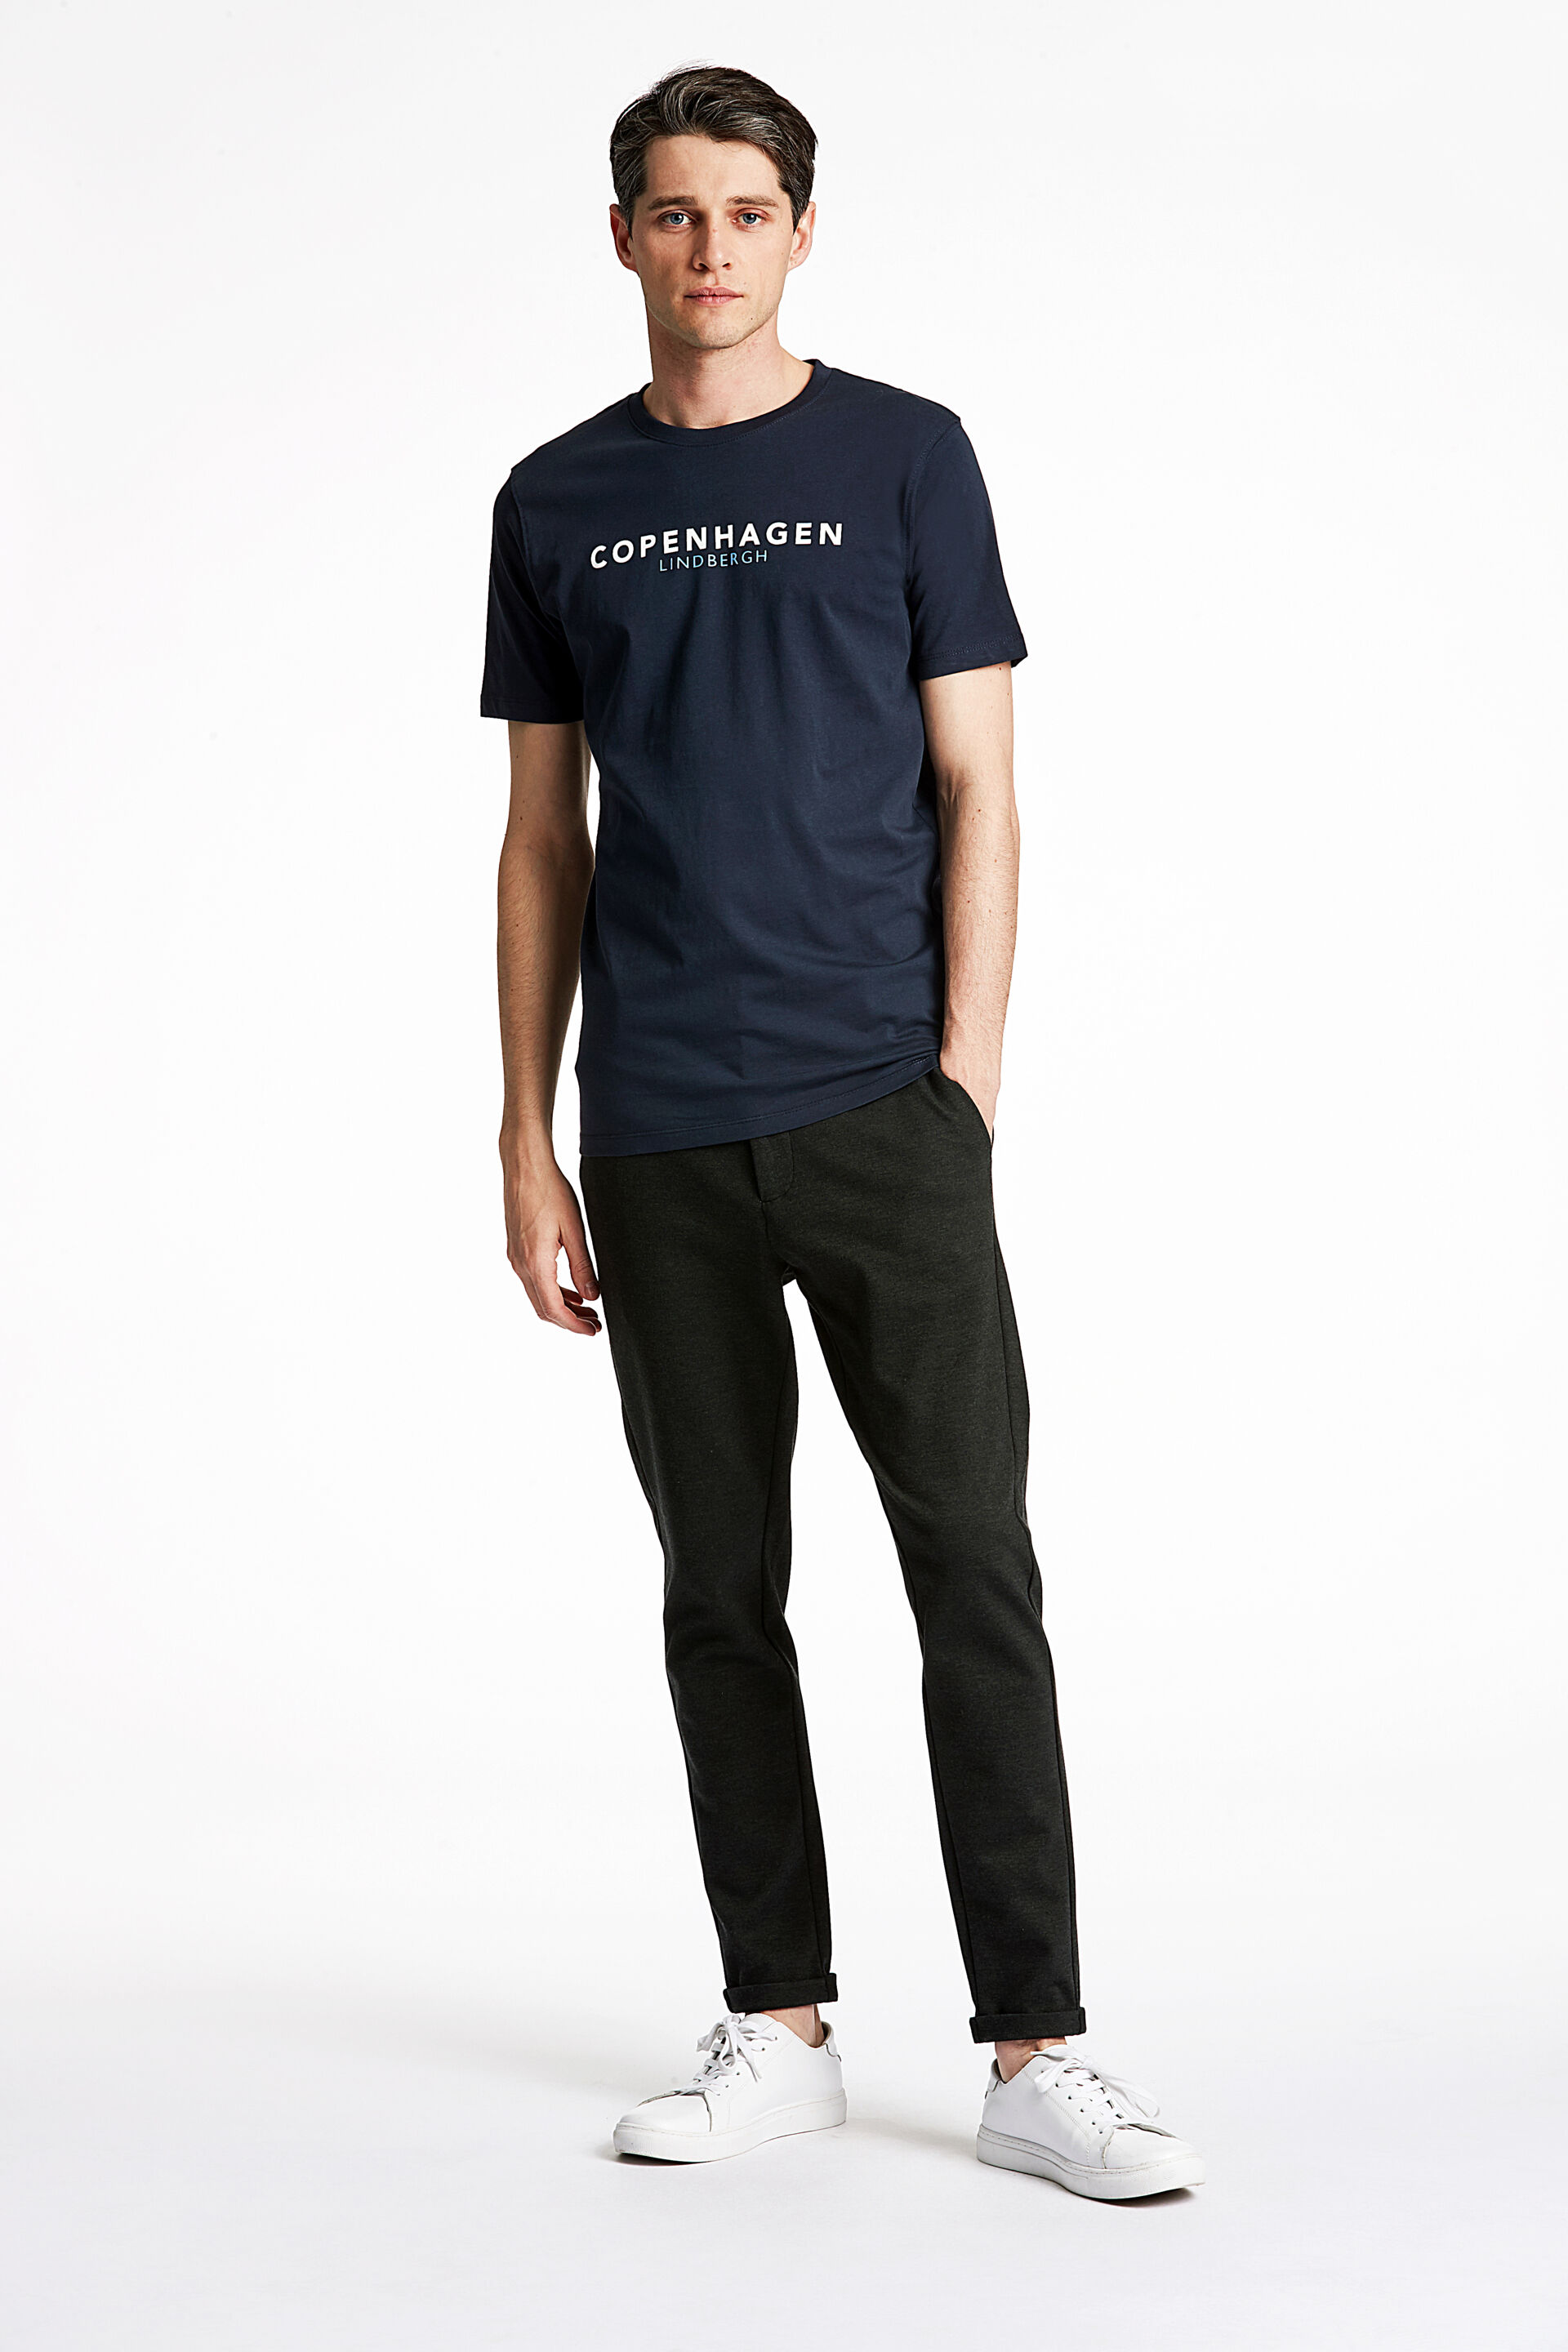 Lindbergh  T-shirt 30-400172A